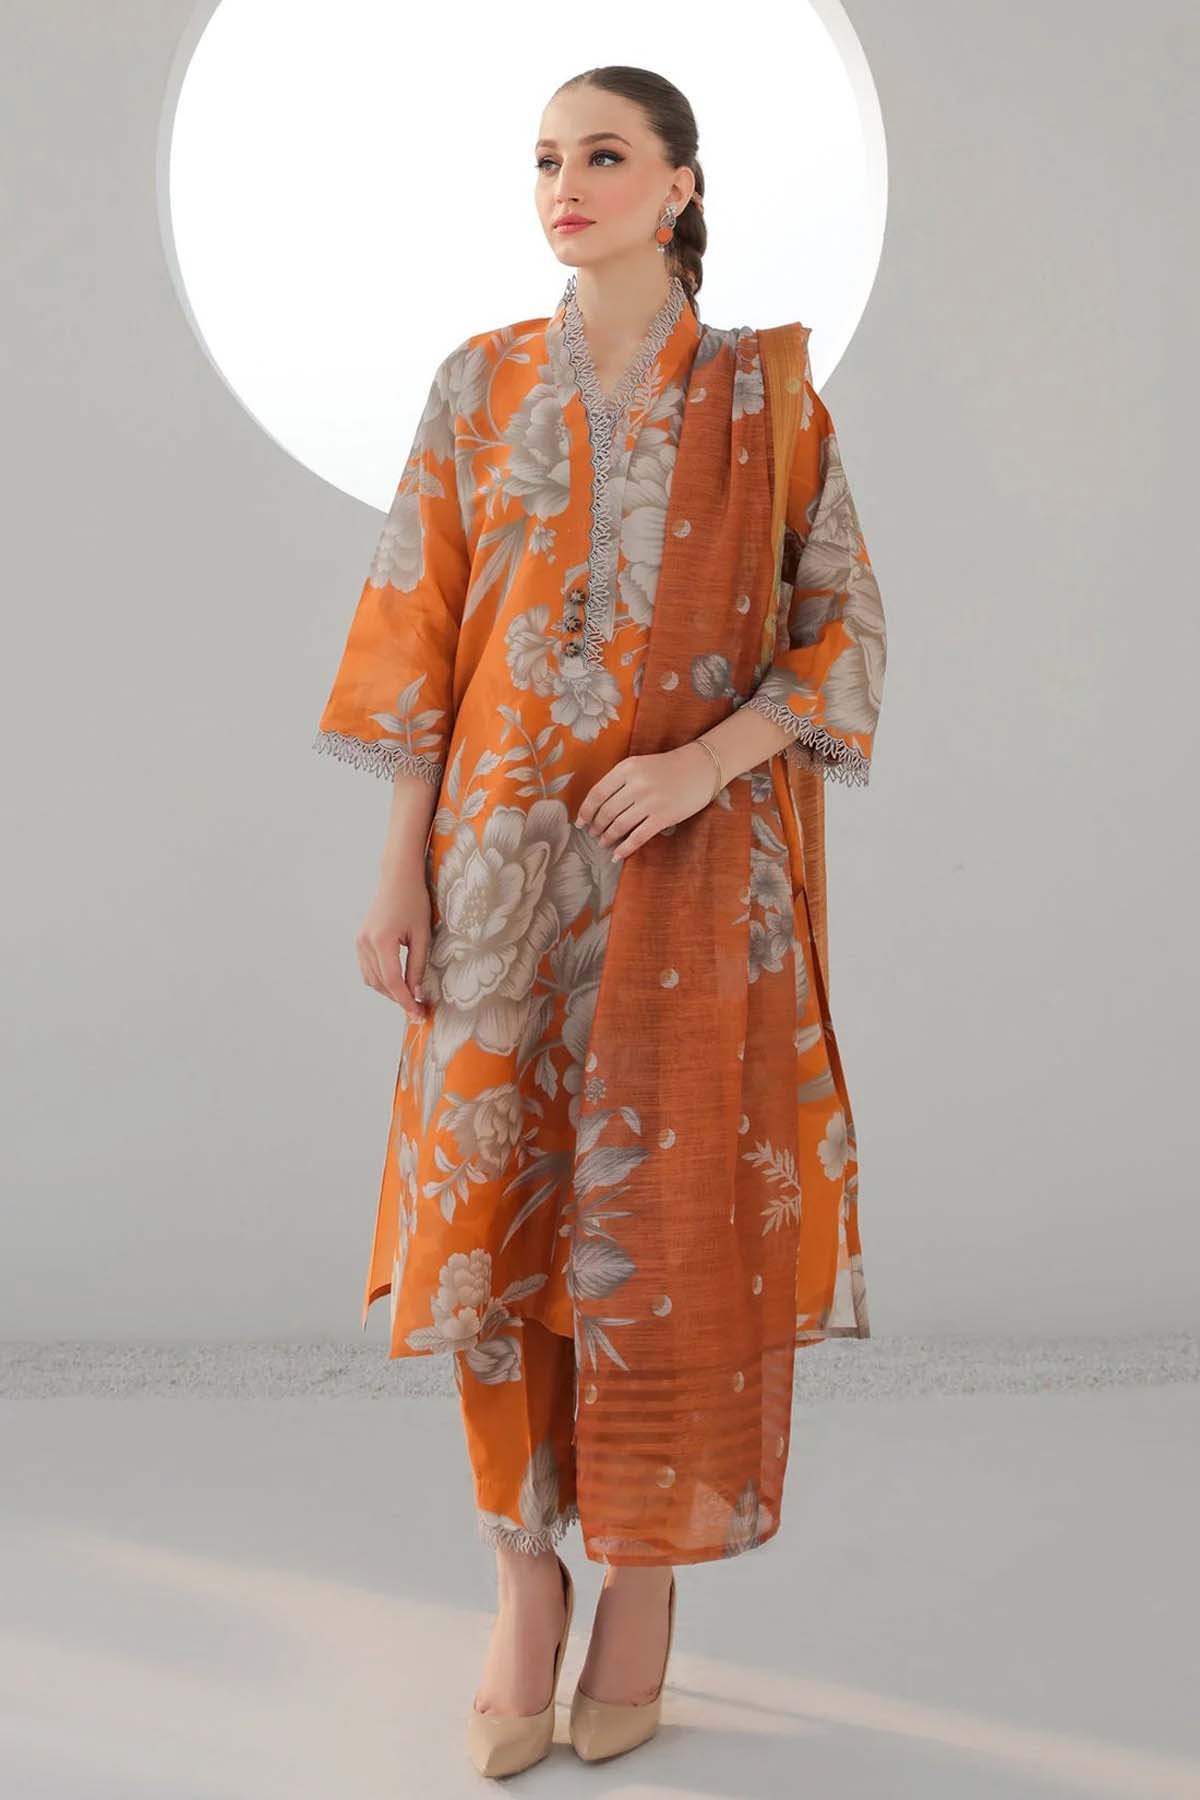 Sapphire women new dress design empires collection pakistan top brand clothing brand fashion 3 piece suit